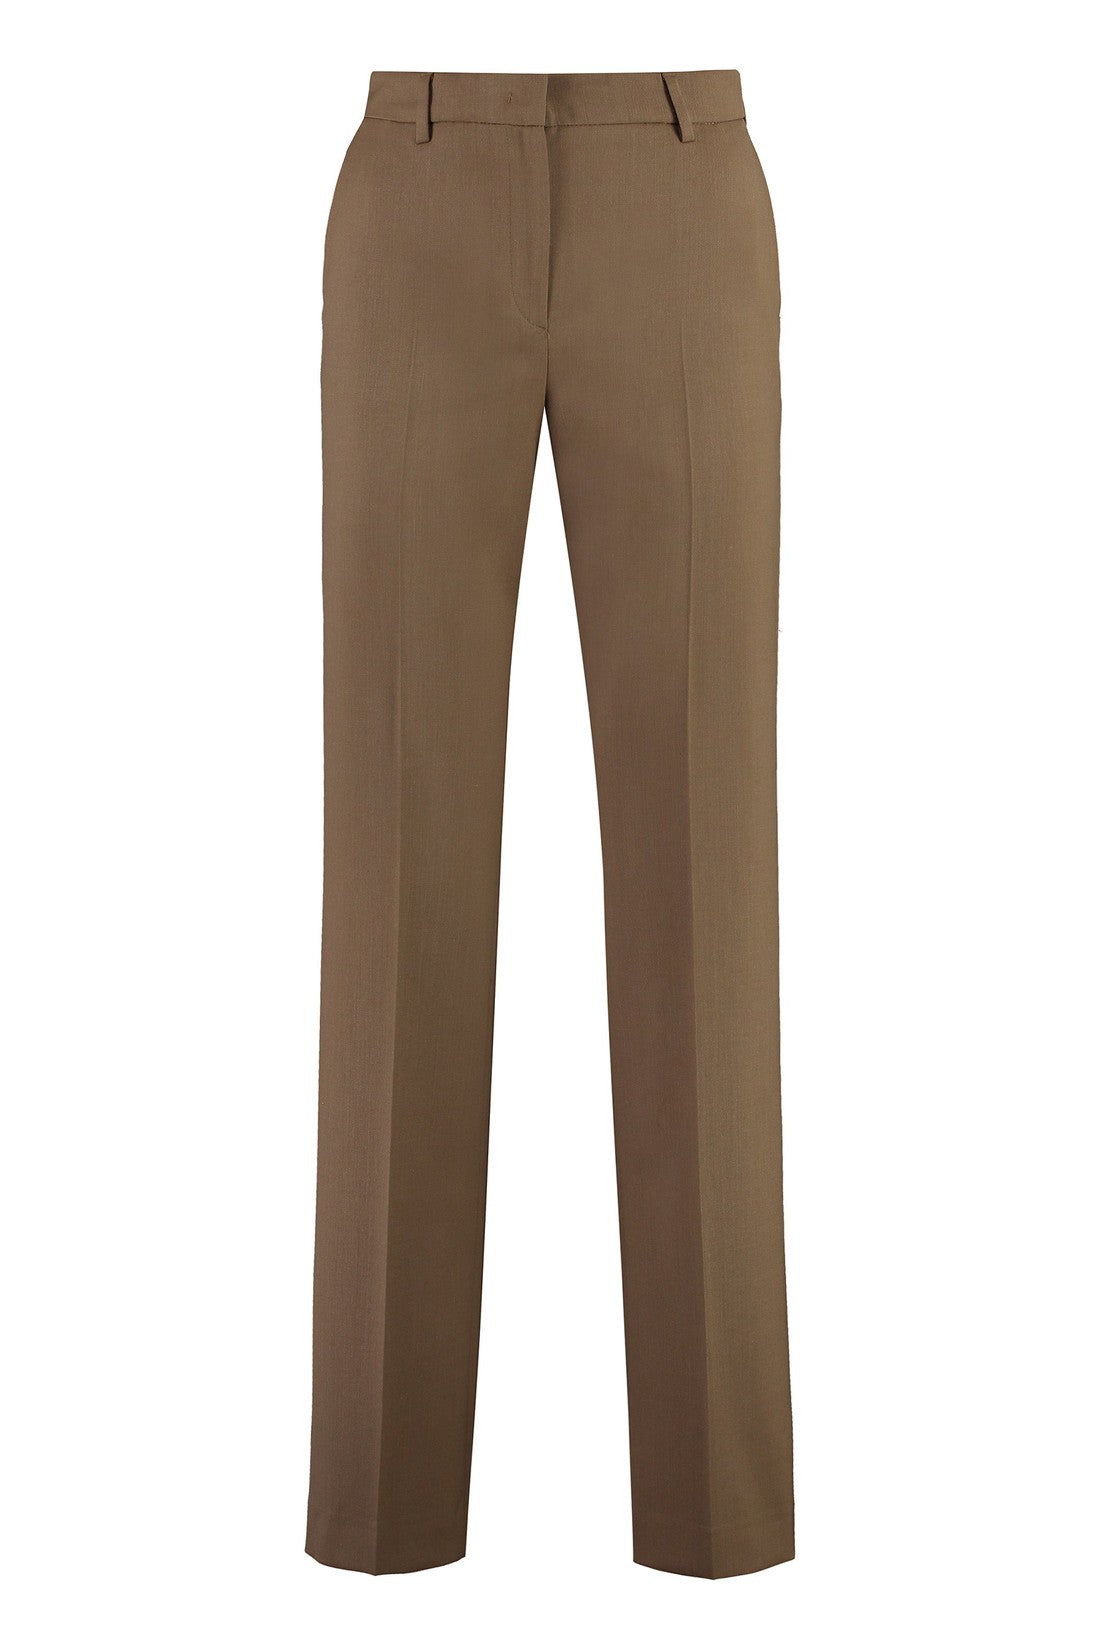 PT01 Pantaloni Torino-OUTLET-SALE-Ambra wool blend trousers-ARCHIVIST